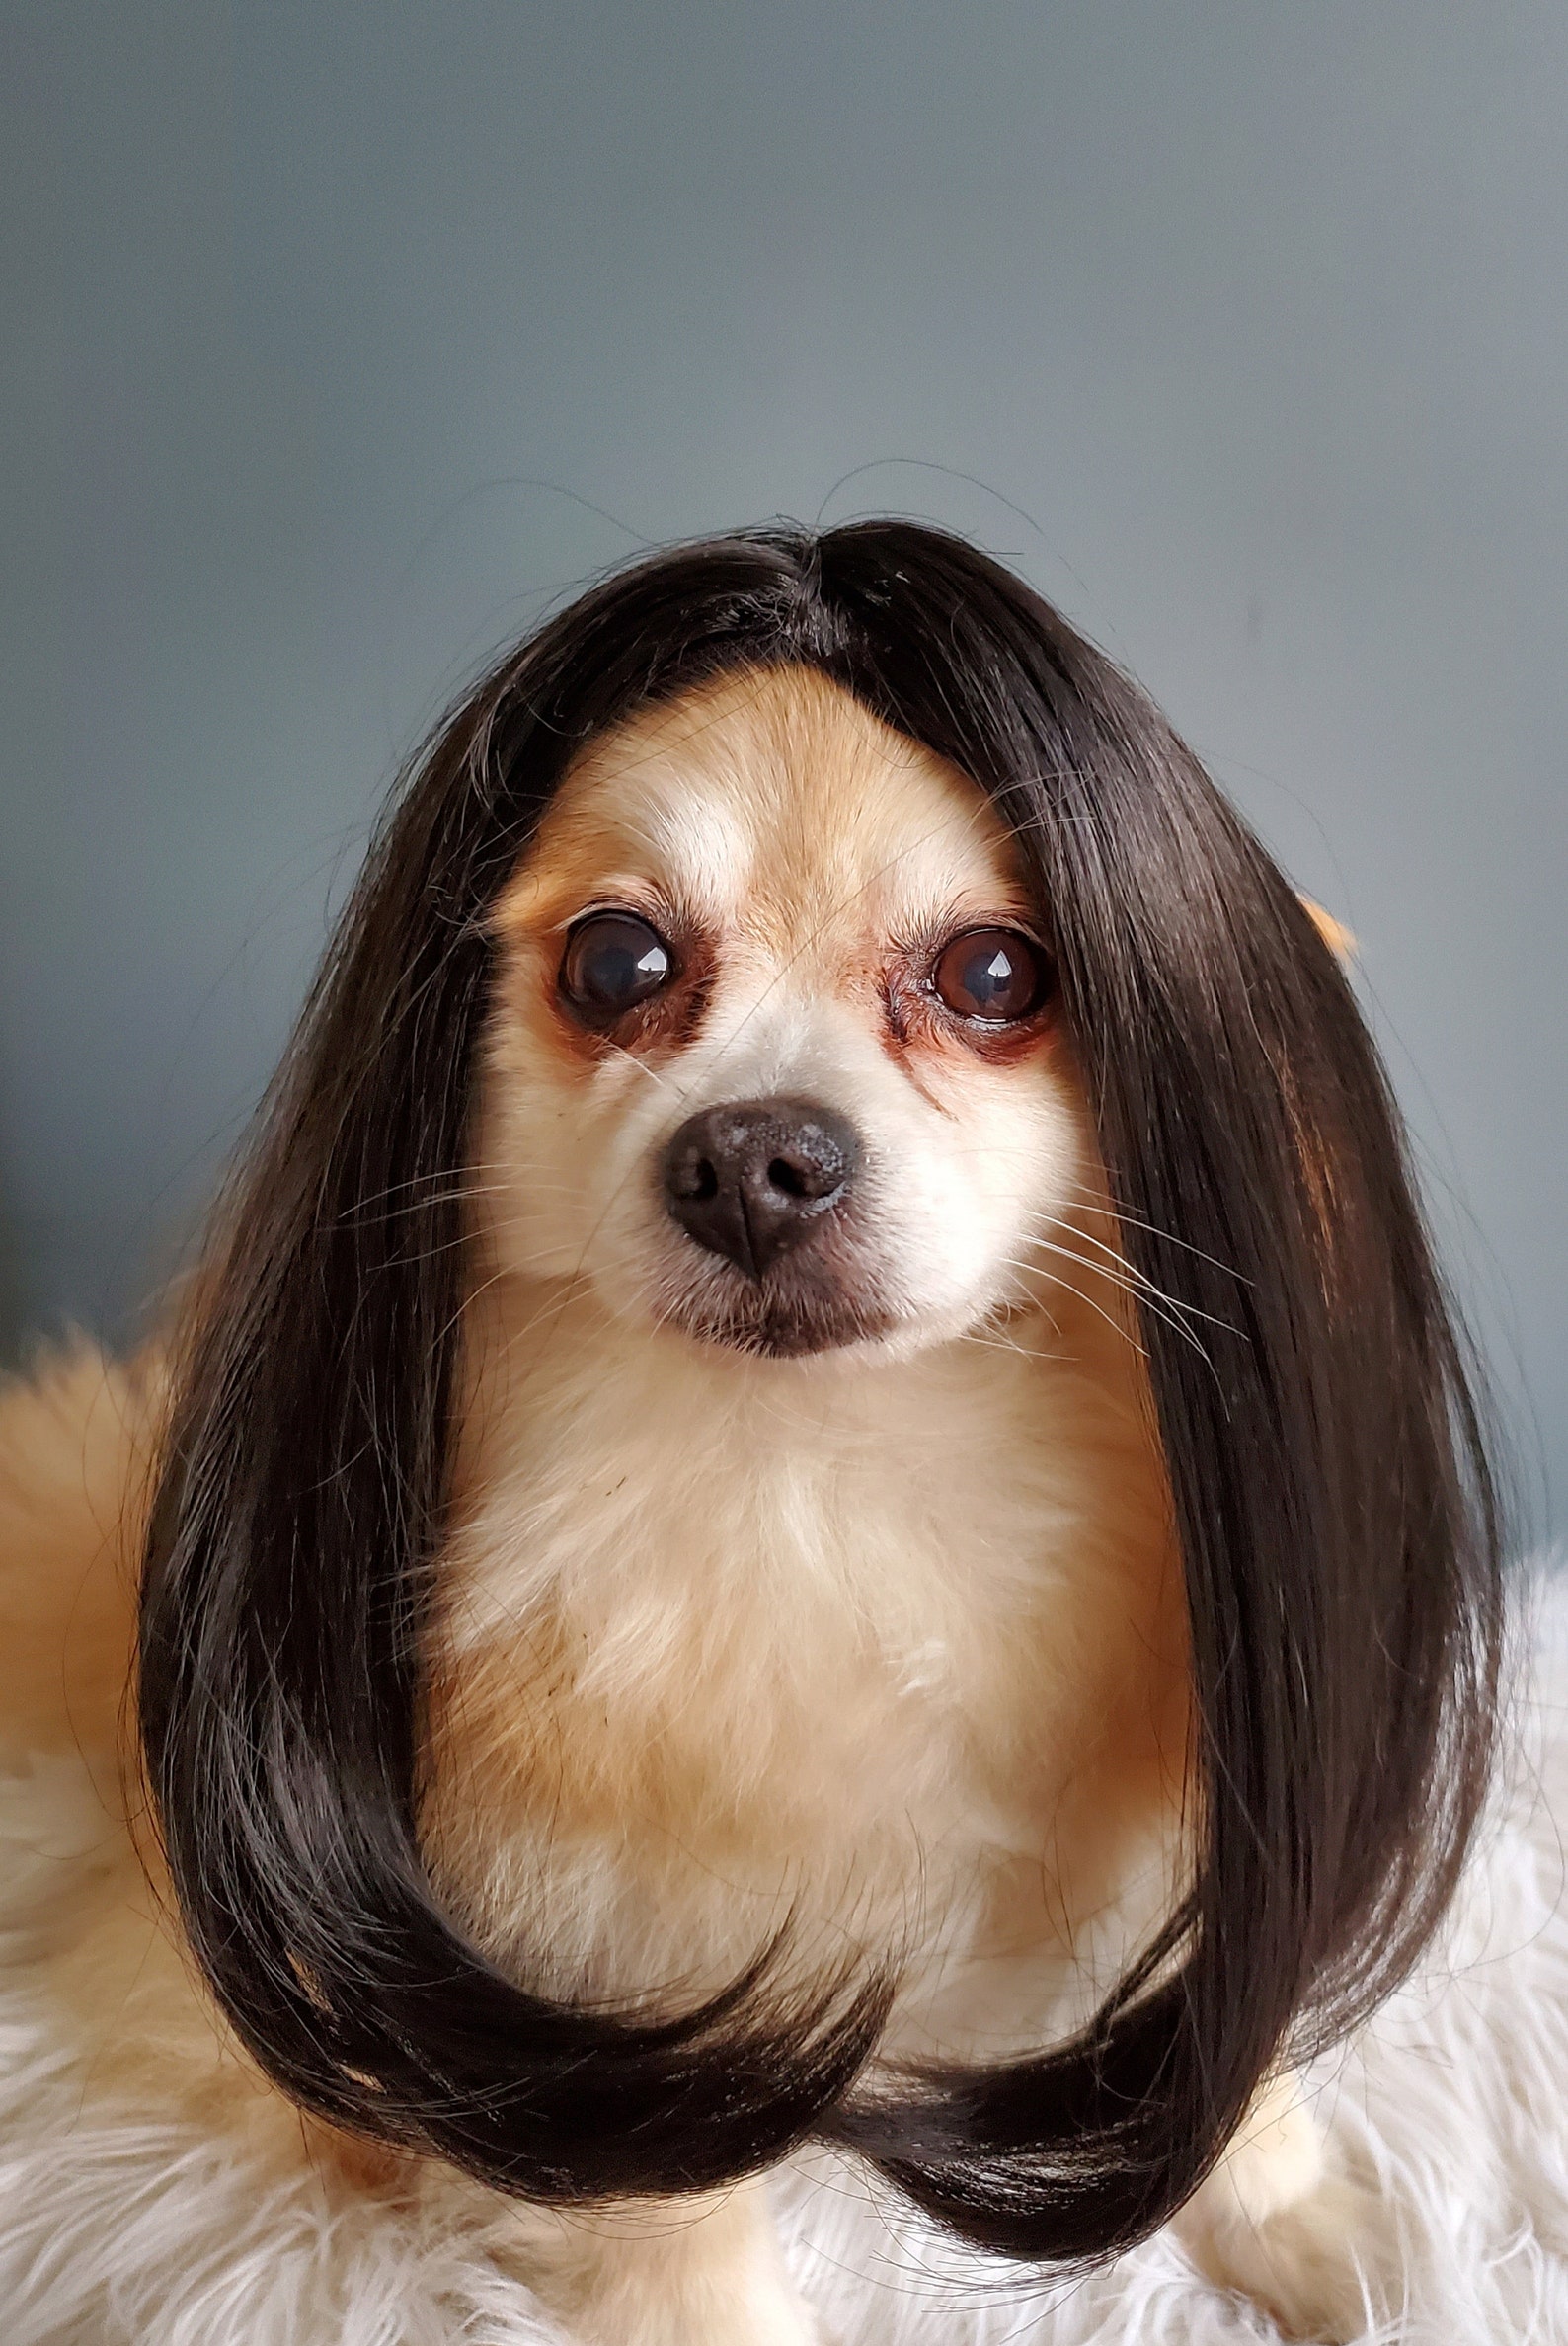 Cute Pet Wig Black Color Dog or Cat/halloween Dog Wig/costume - Etsy